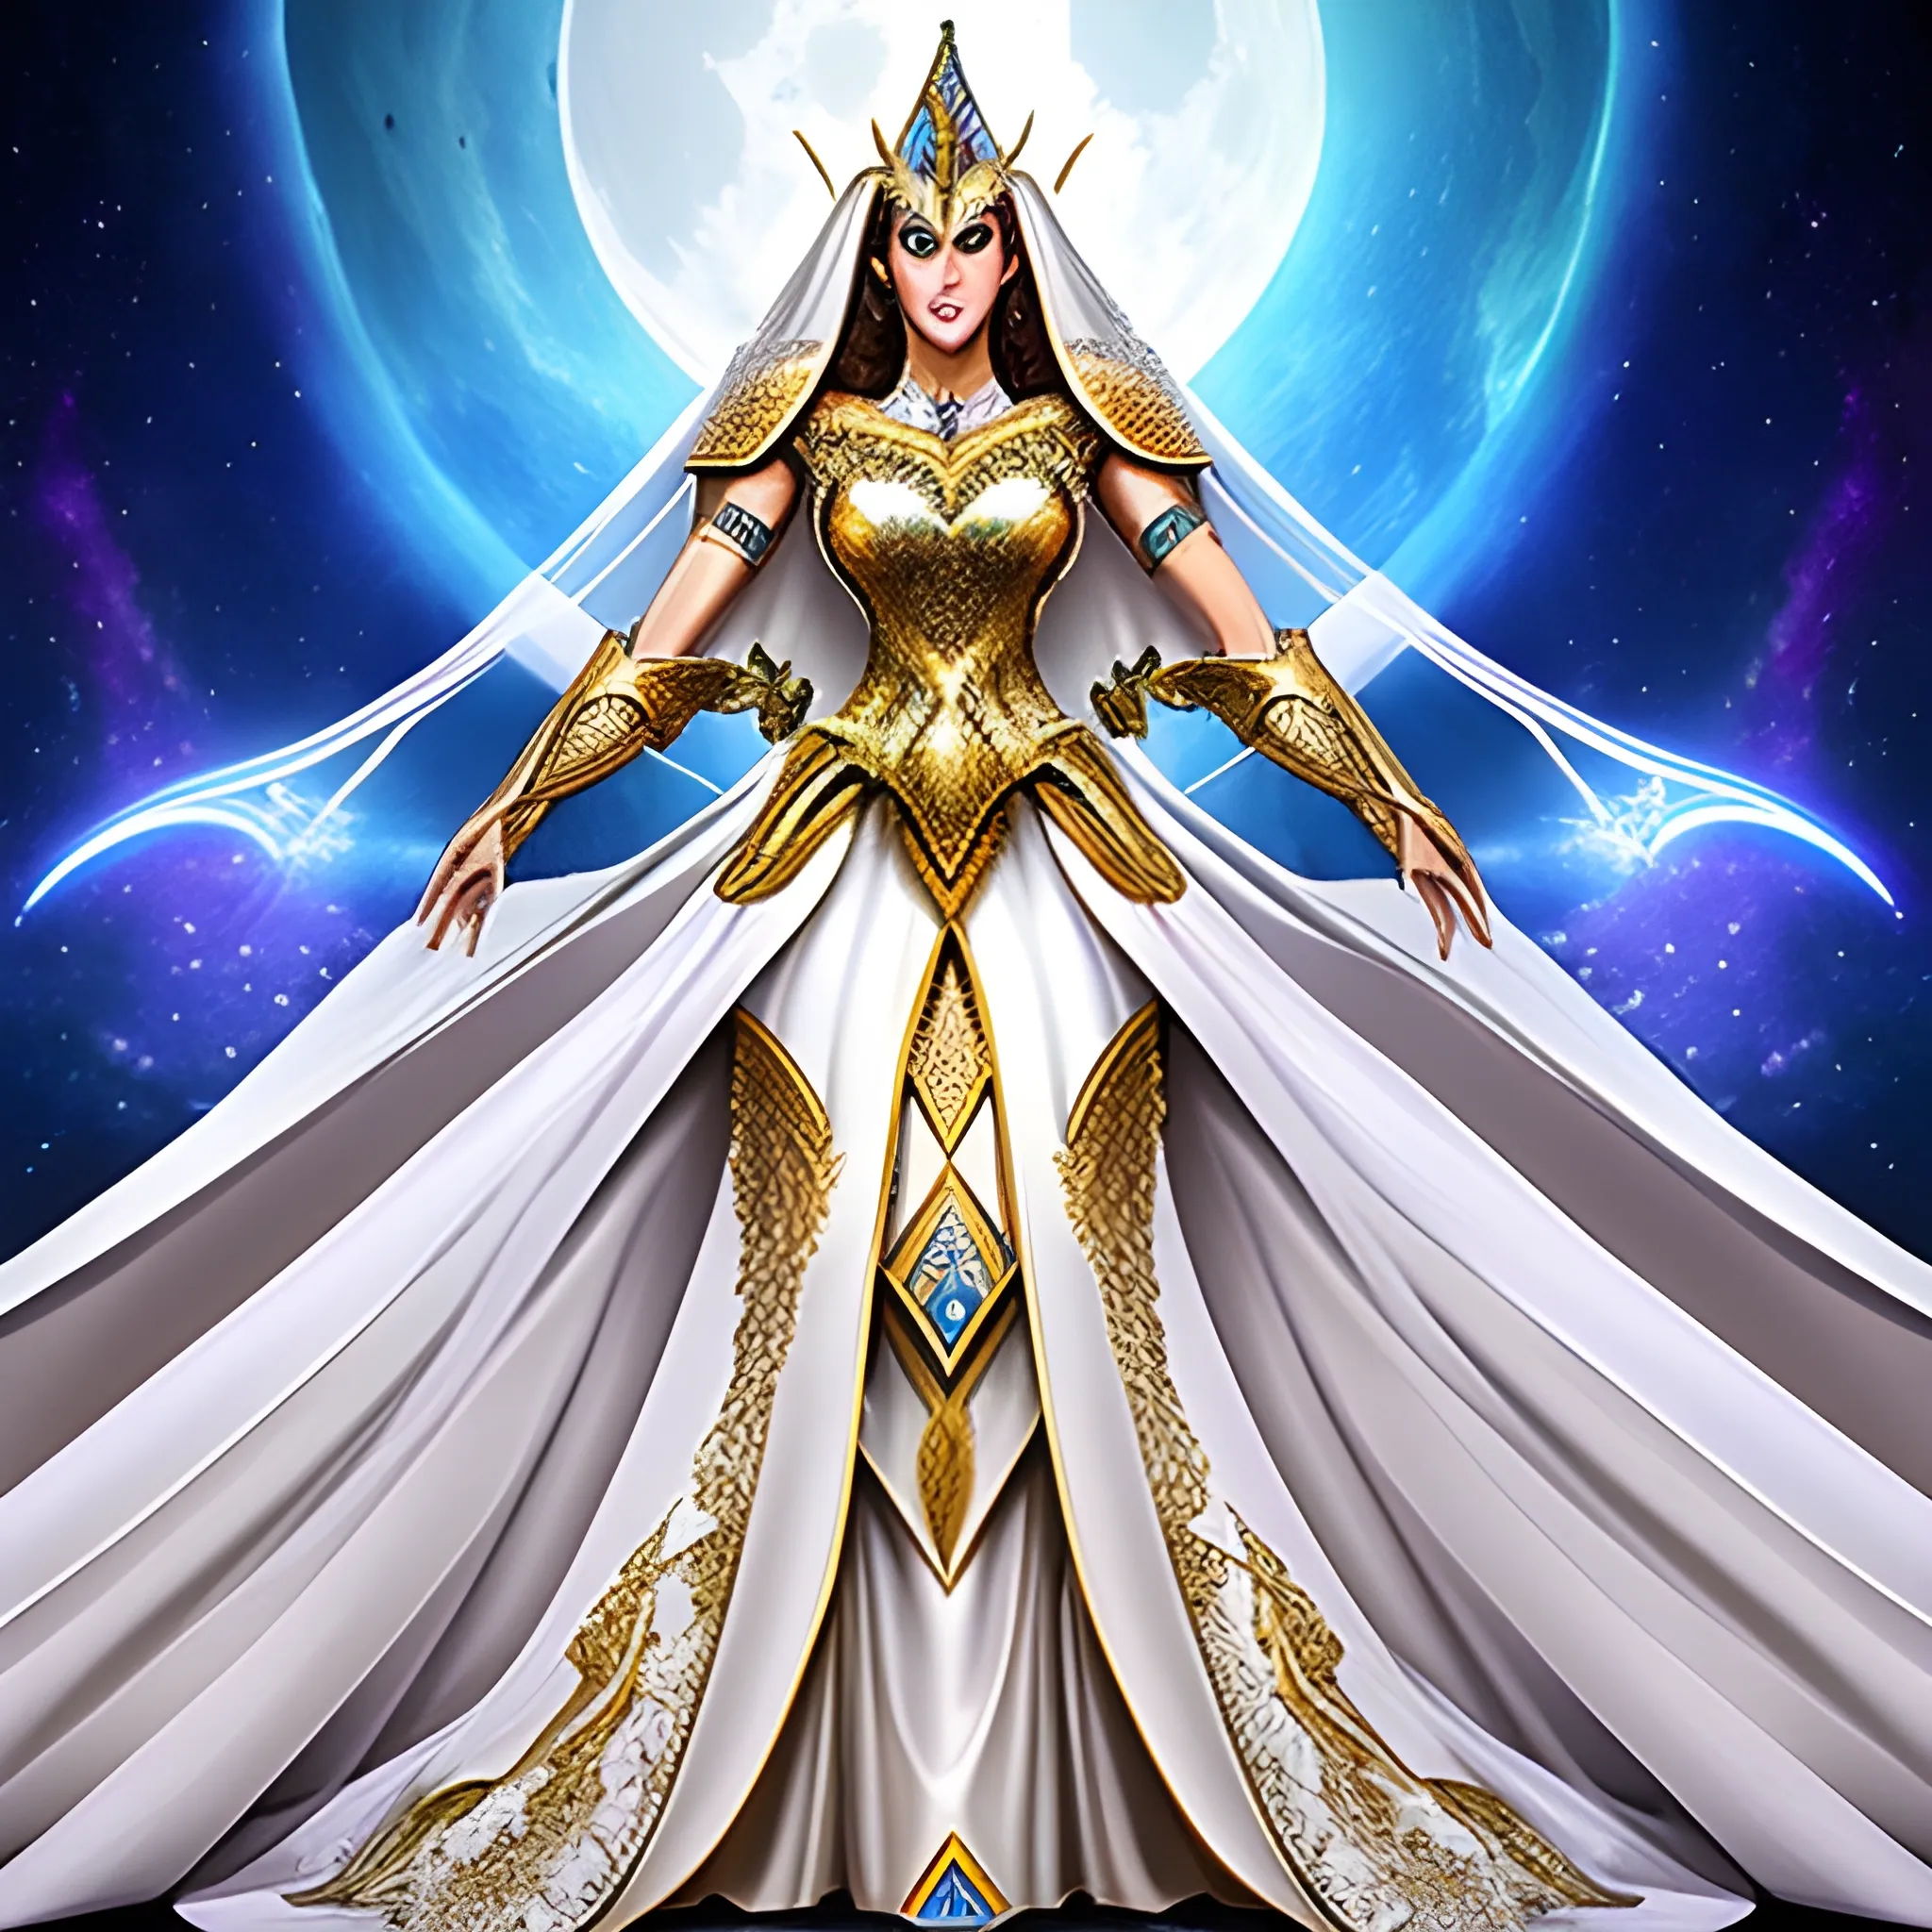 princess wedding dress warrior moon goddess armor majestic supreme powerful starchild thoth she-ra extravagant fantasy gown